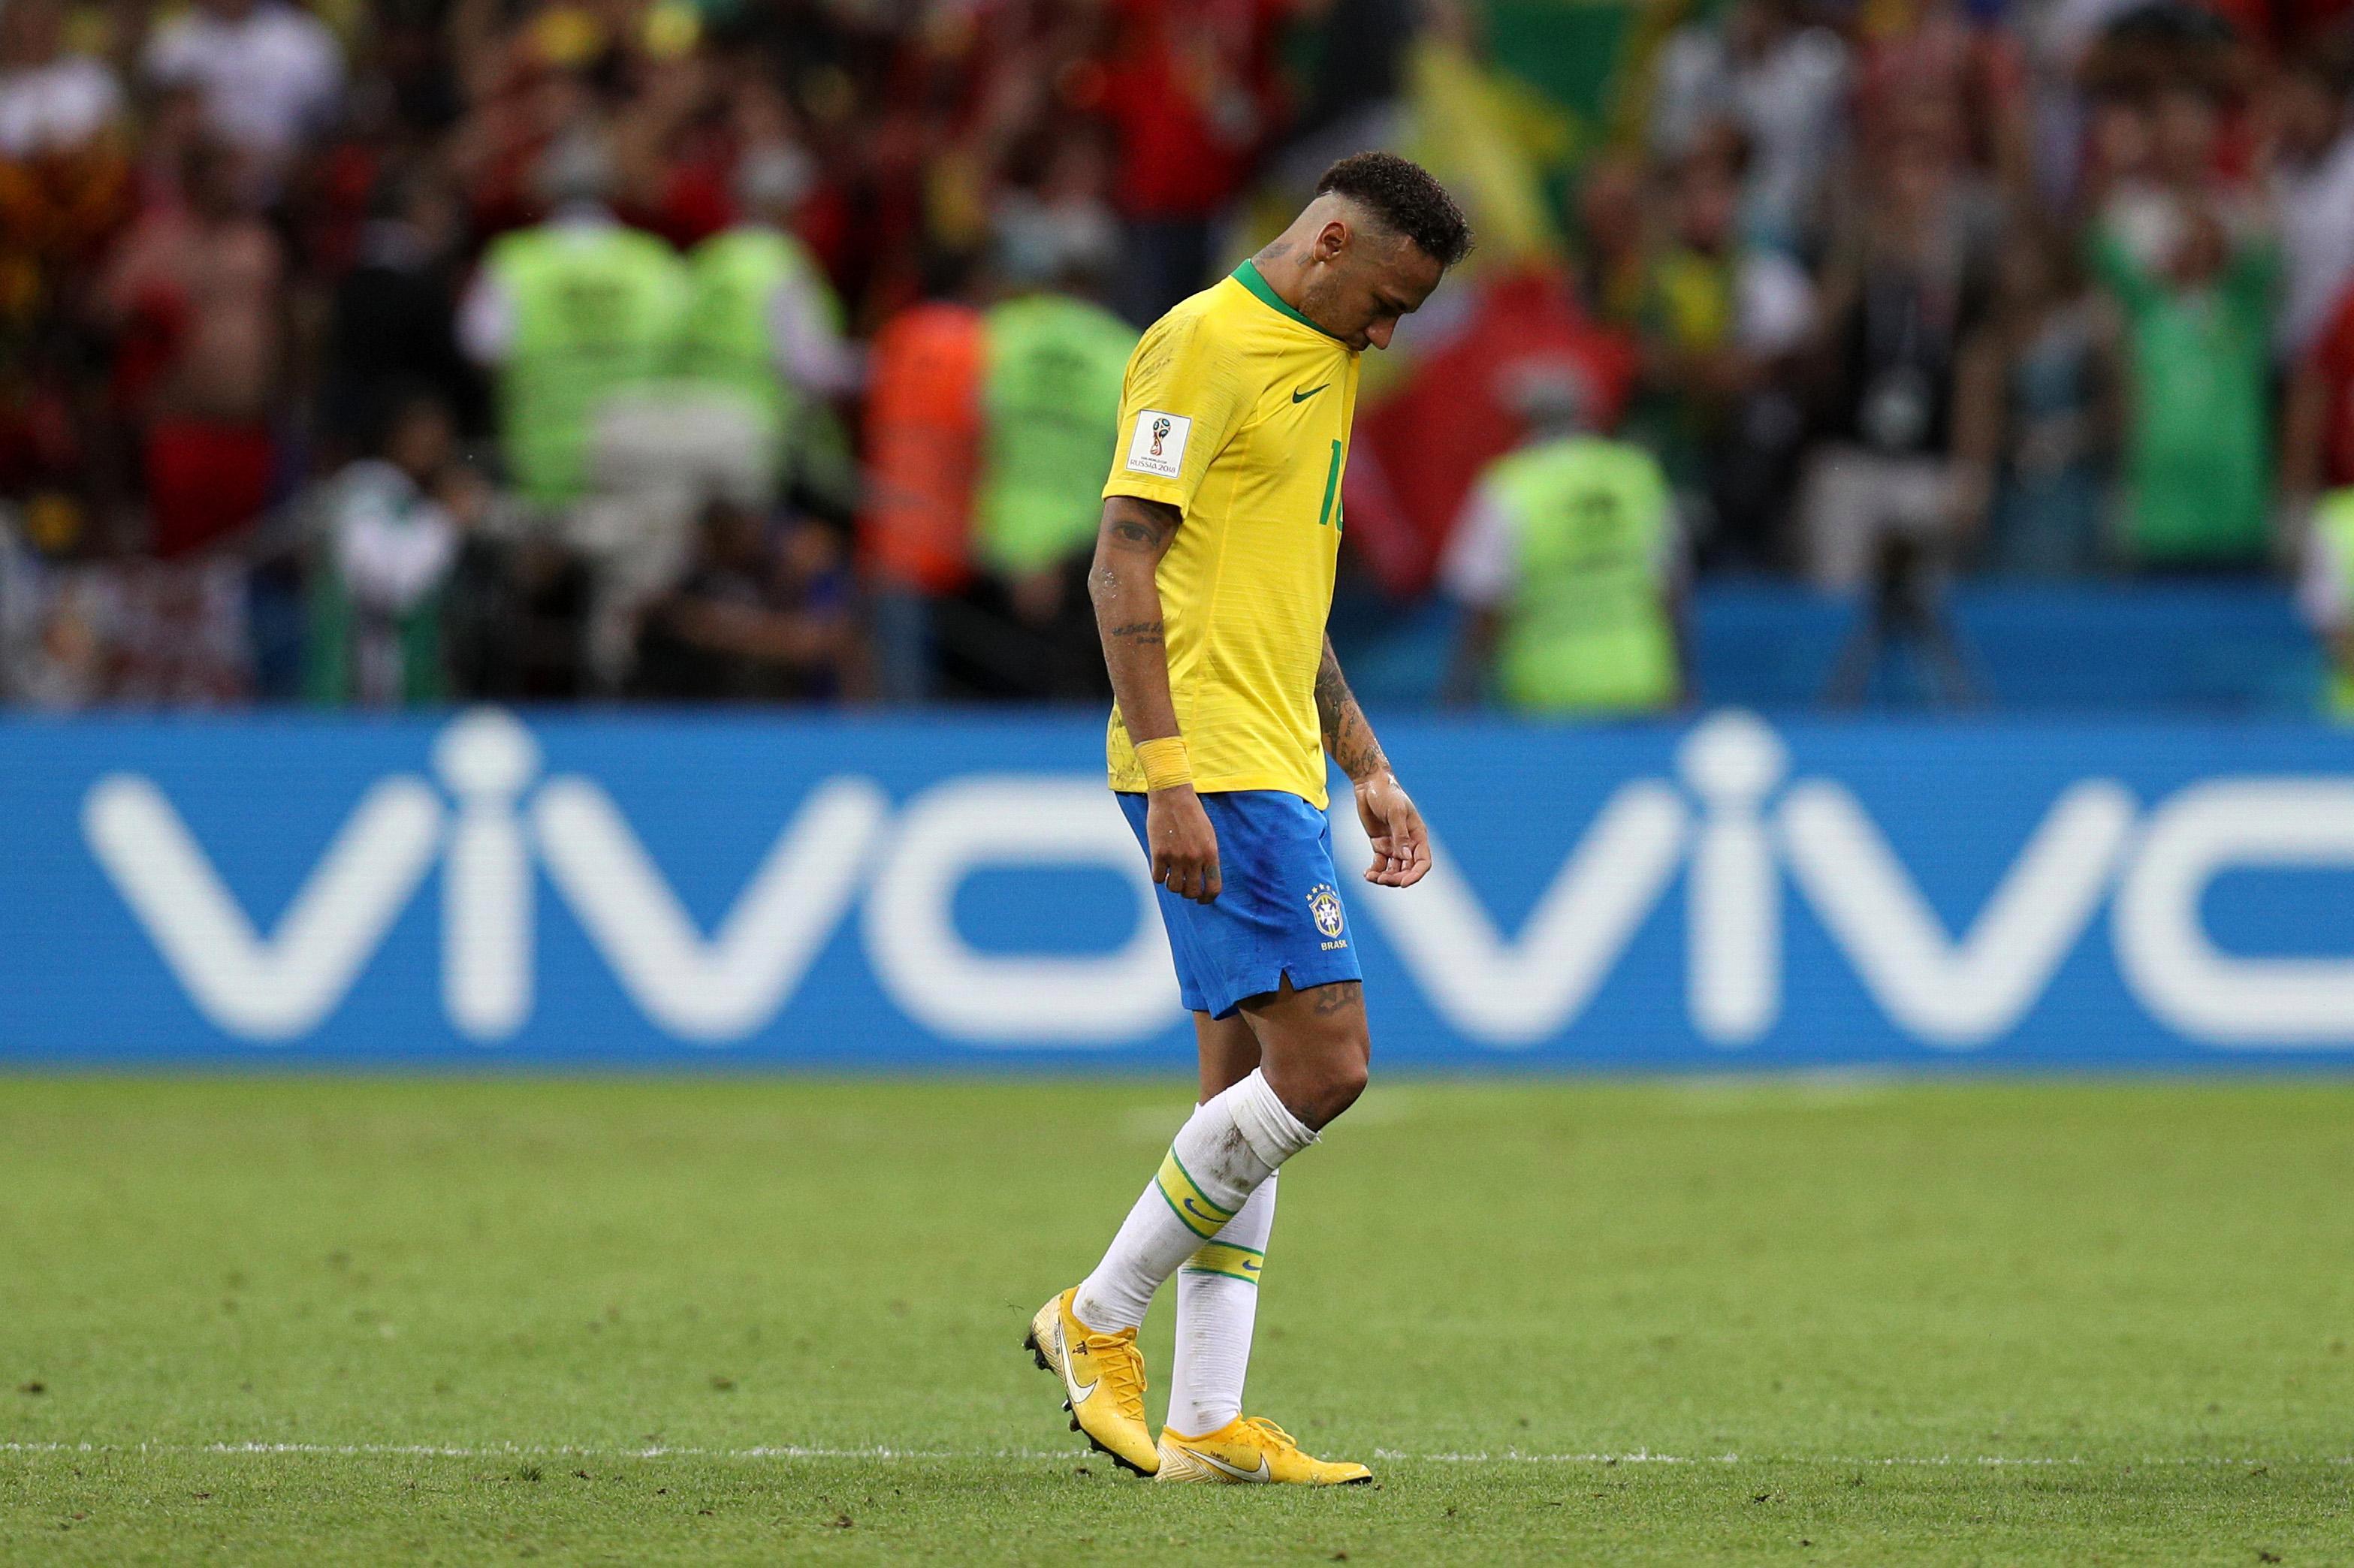 'Hazard is better than Neymar' - Fans rave about Chelsea winger after Belgium eliminate Brazil in superstar showdown